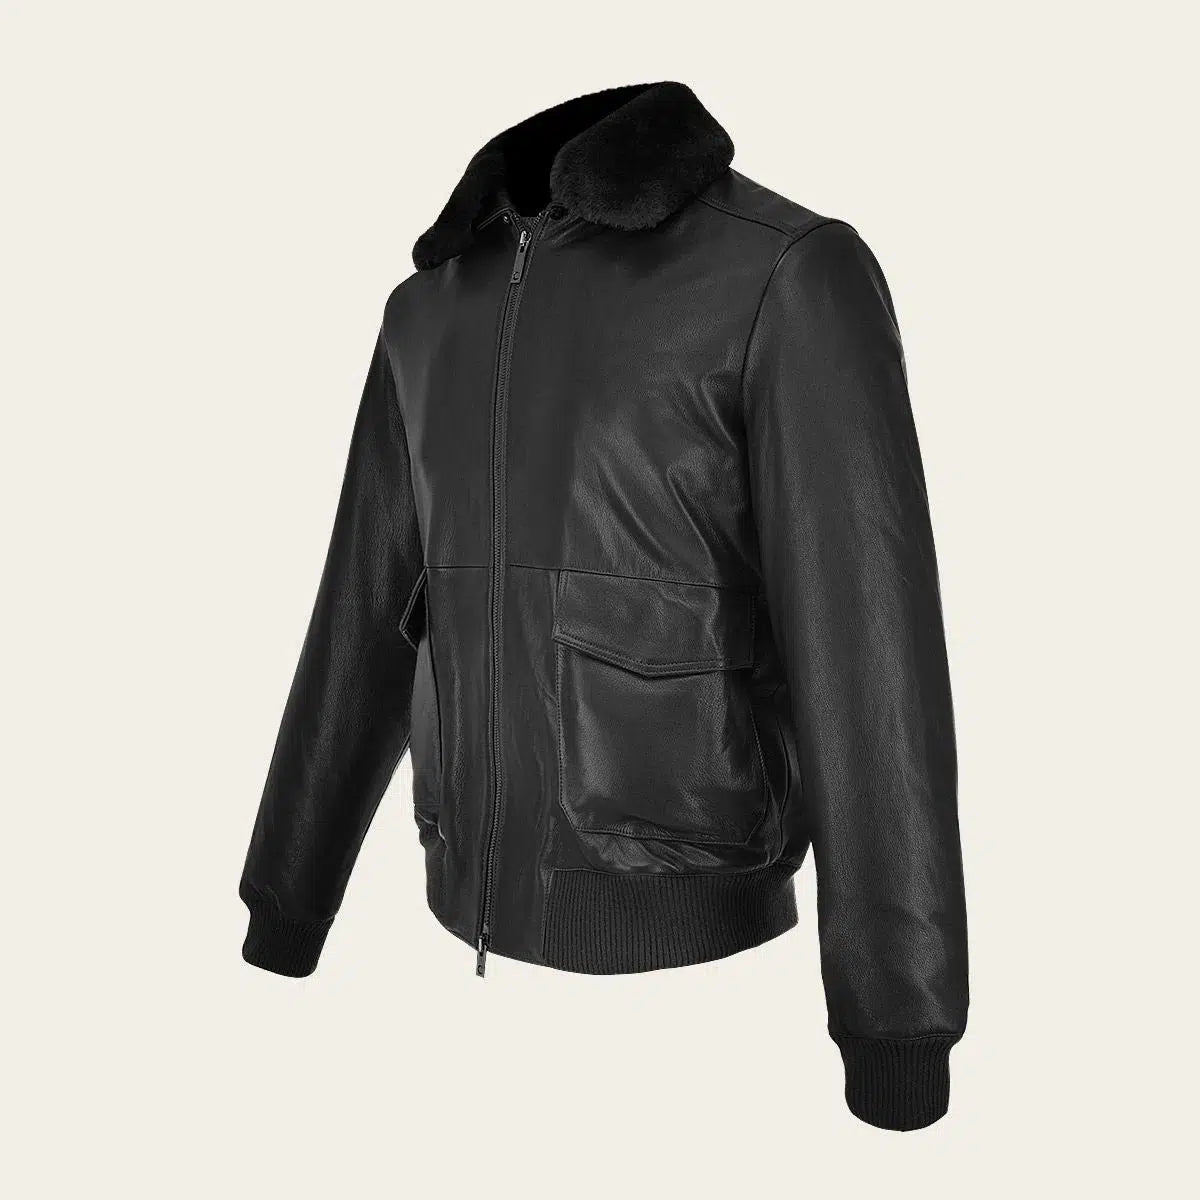 HCHI008 - Cuadra black dress casual fashion aviator leather jacket for men-Kuet.us - Cuadra Boots - Western Cowboy, Casual Fashion and Dress Boots